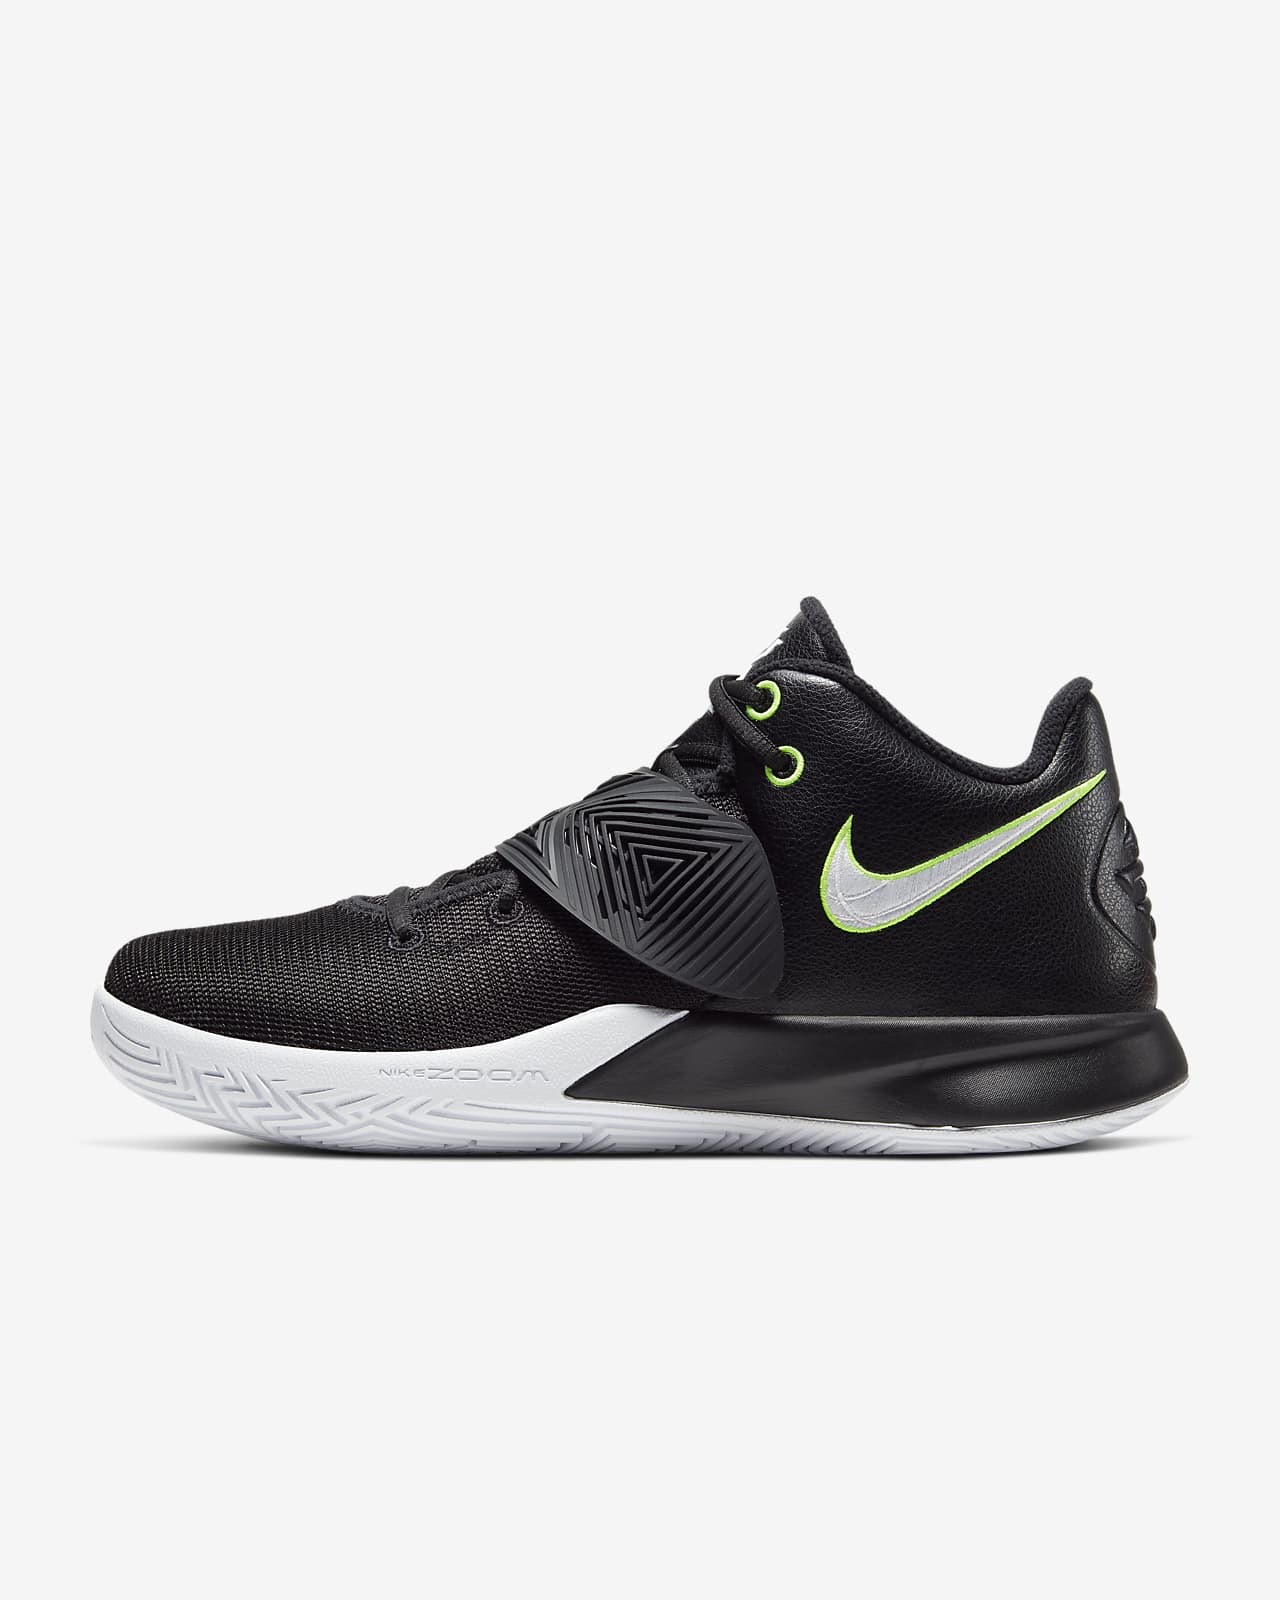 Kyrie Flytrap 3 Basketball Shoe. Nike.com